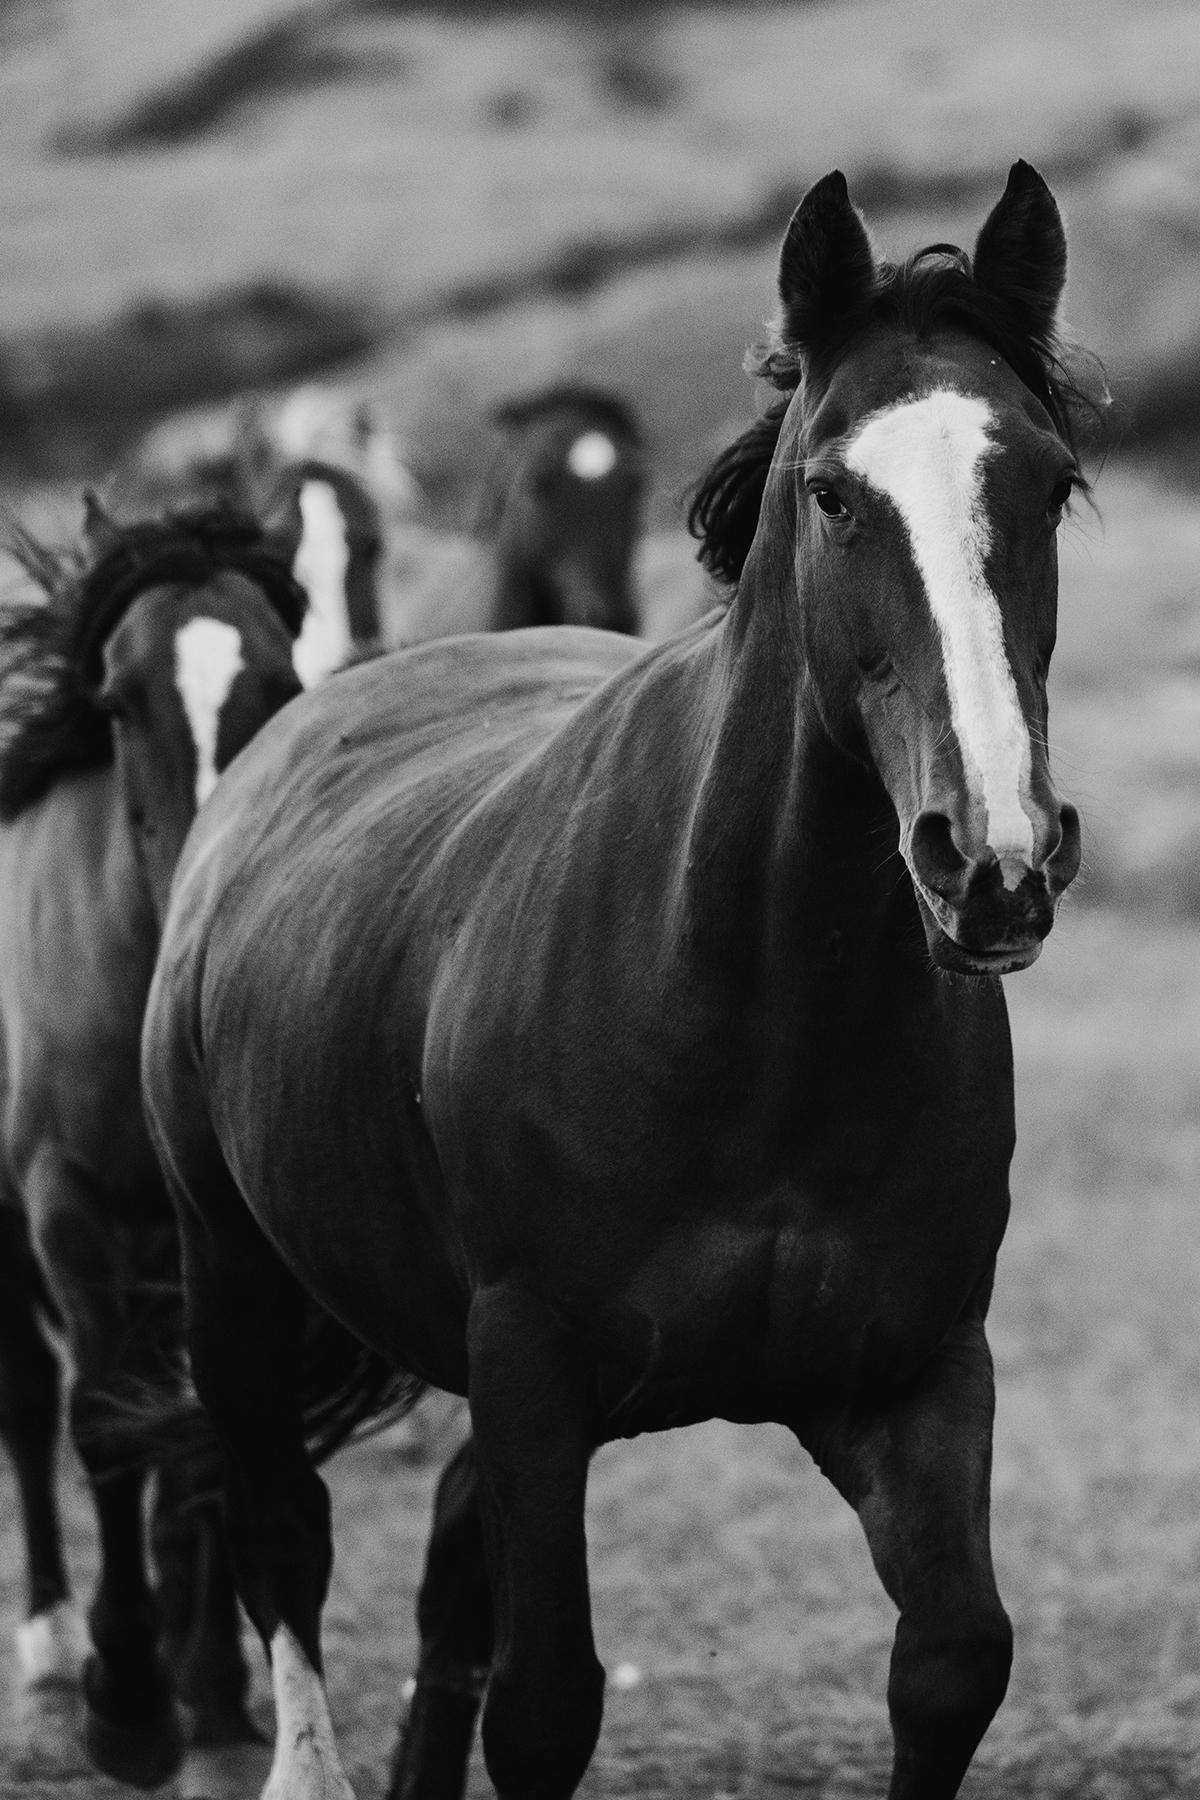 Addison Jones Black and White Photograph - Horses, Wild Horse, Black and White Horse Photography-Prancing Peter